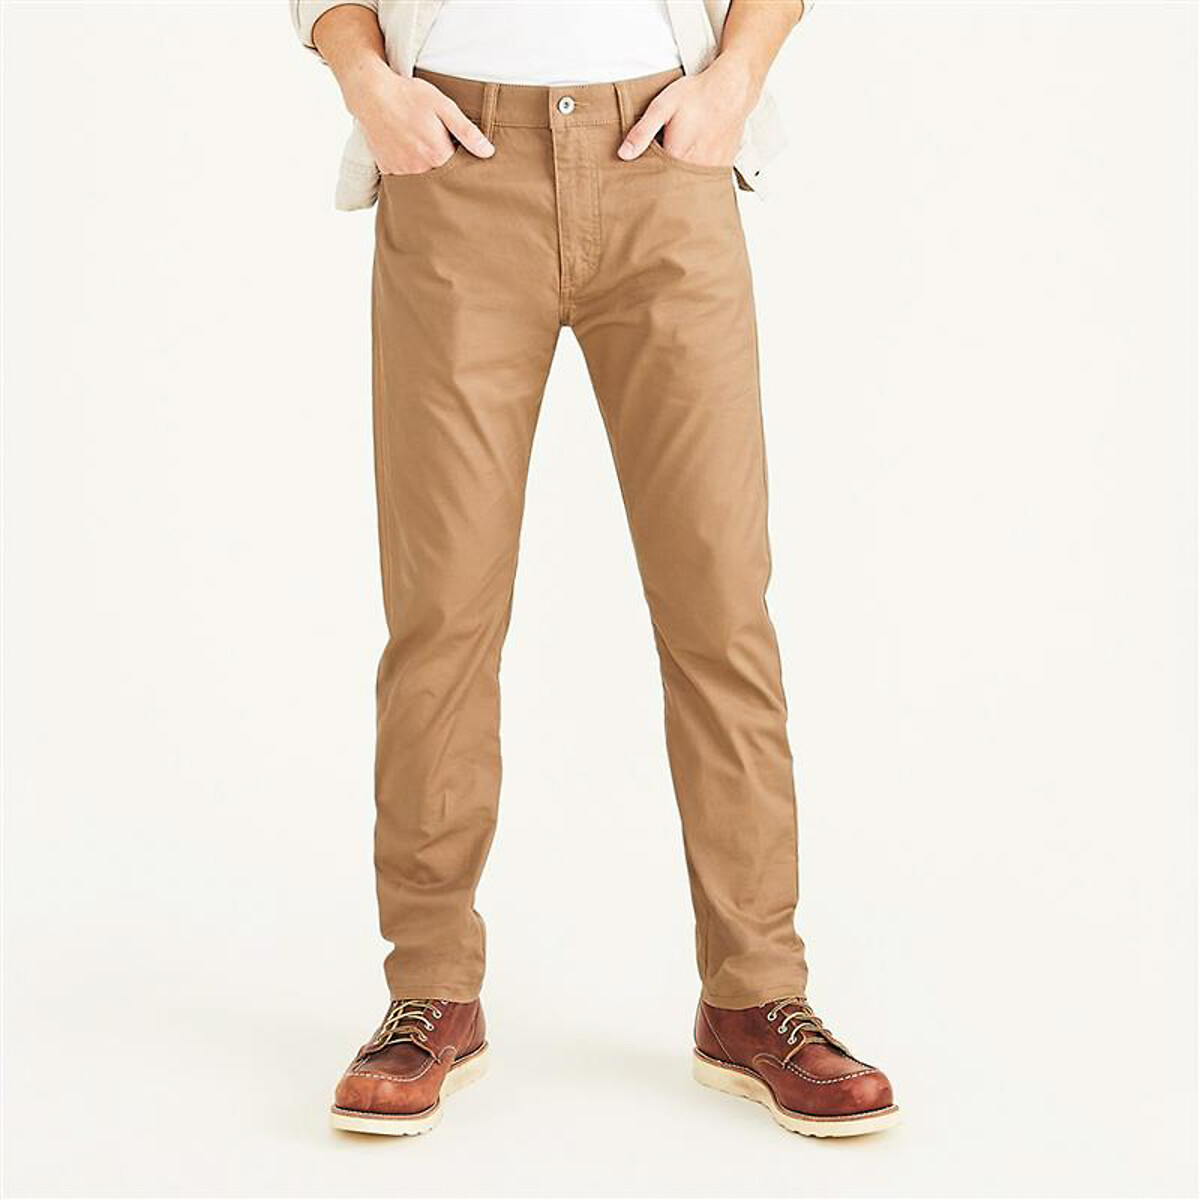 Men's Blue Dockers Casual Pants: 37 Items in Stock | Stylight